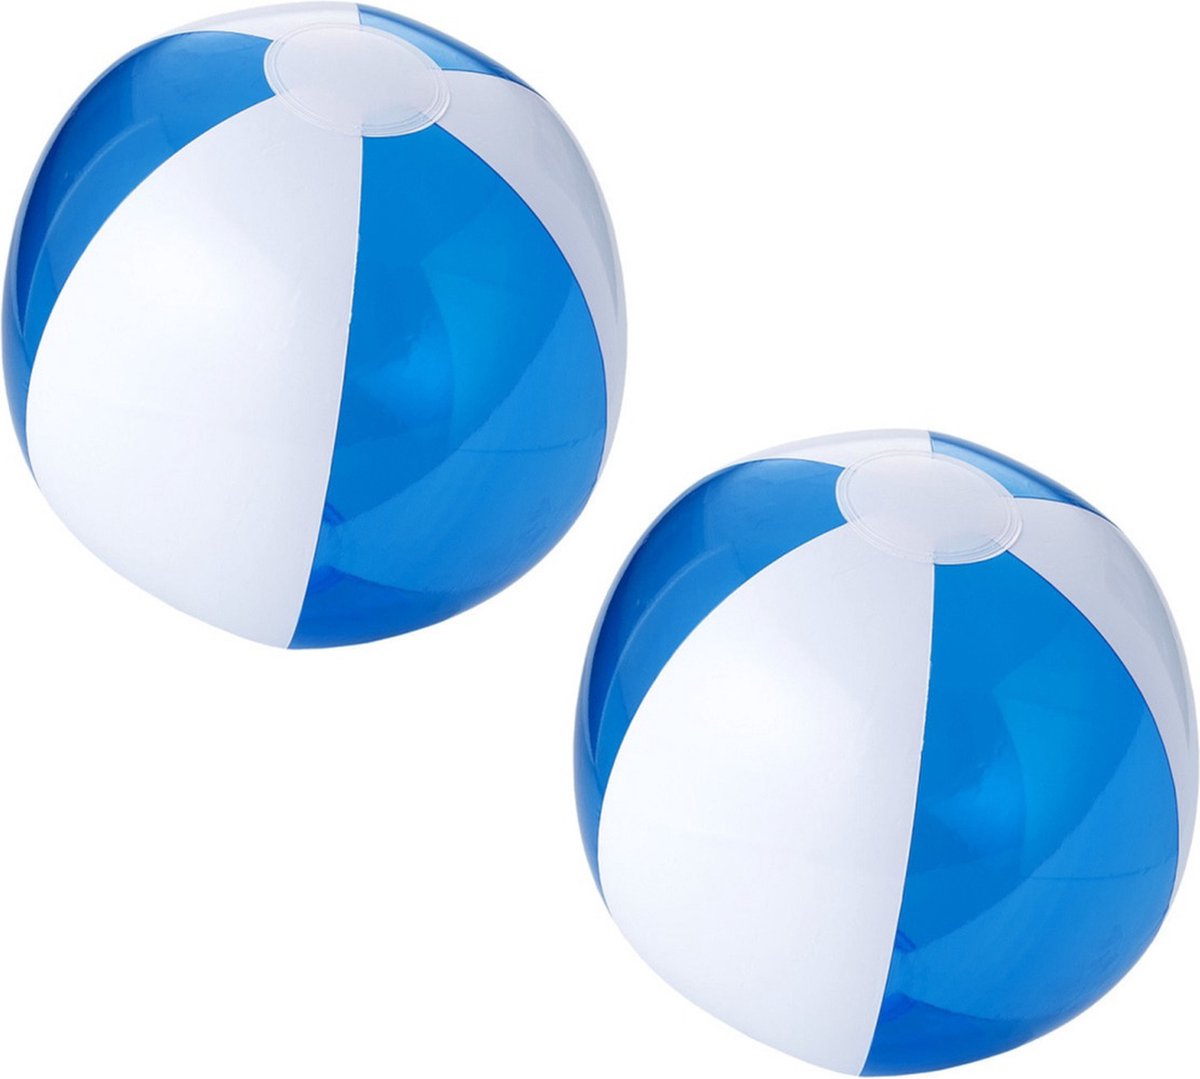 5x stuks opblaasbare strandballen blauw/wit 30 cm - Buitenspeelgoed waterspeelgoed opblaasbaar